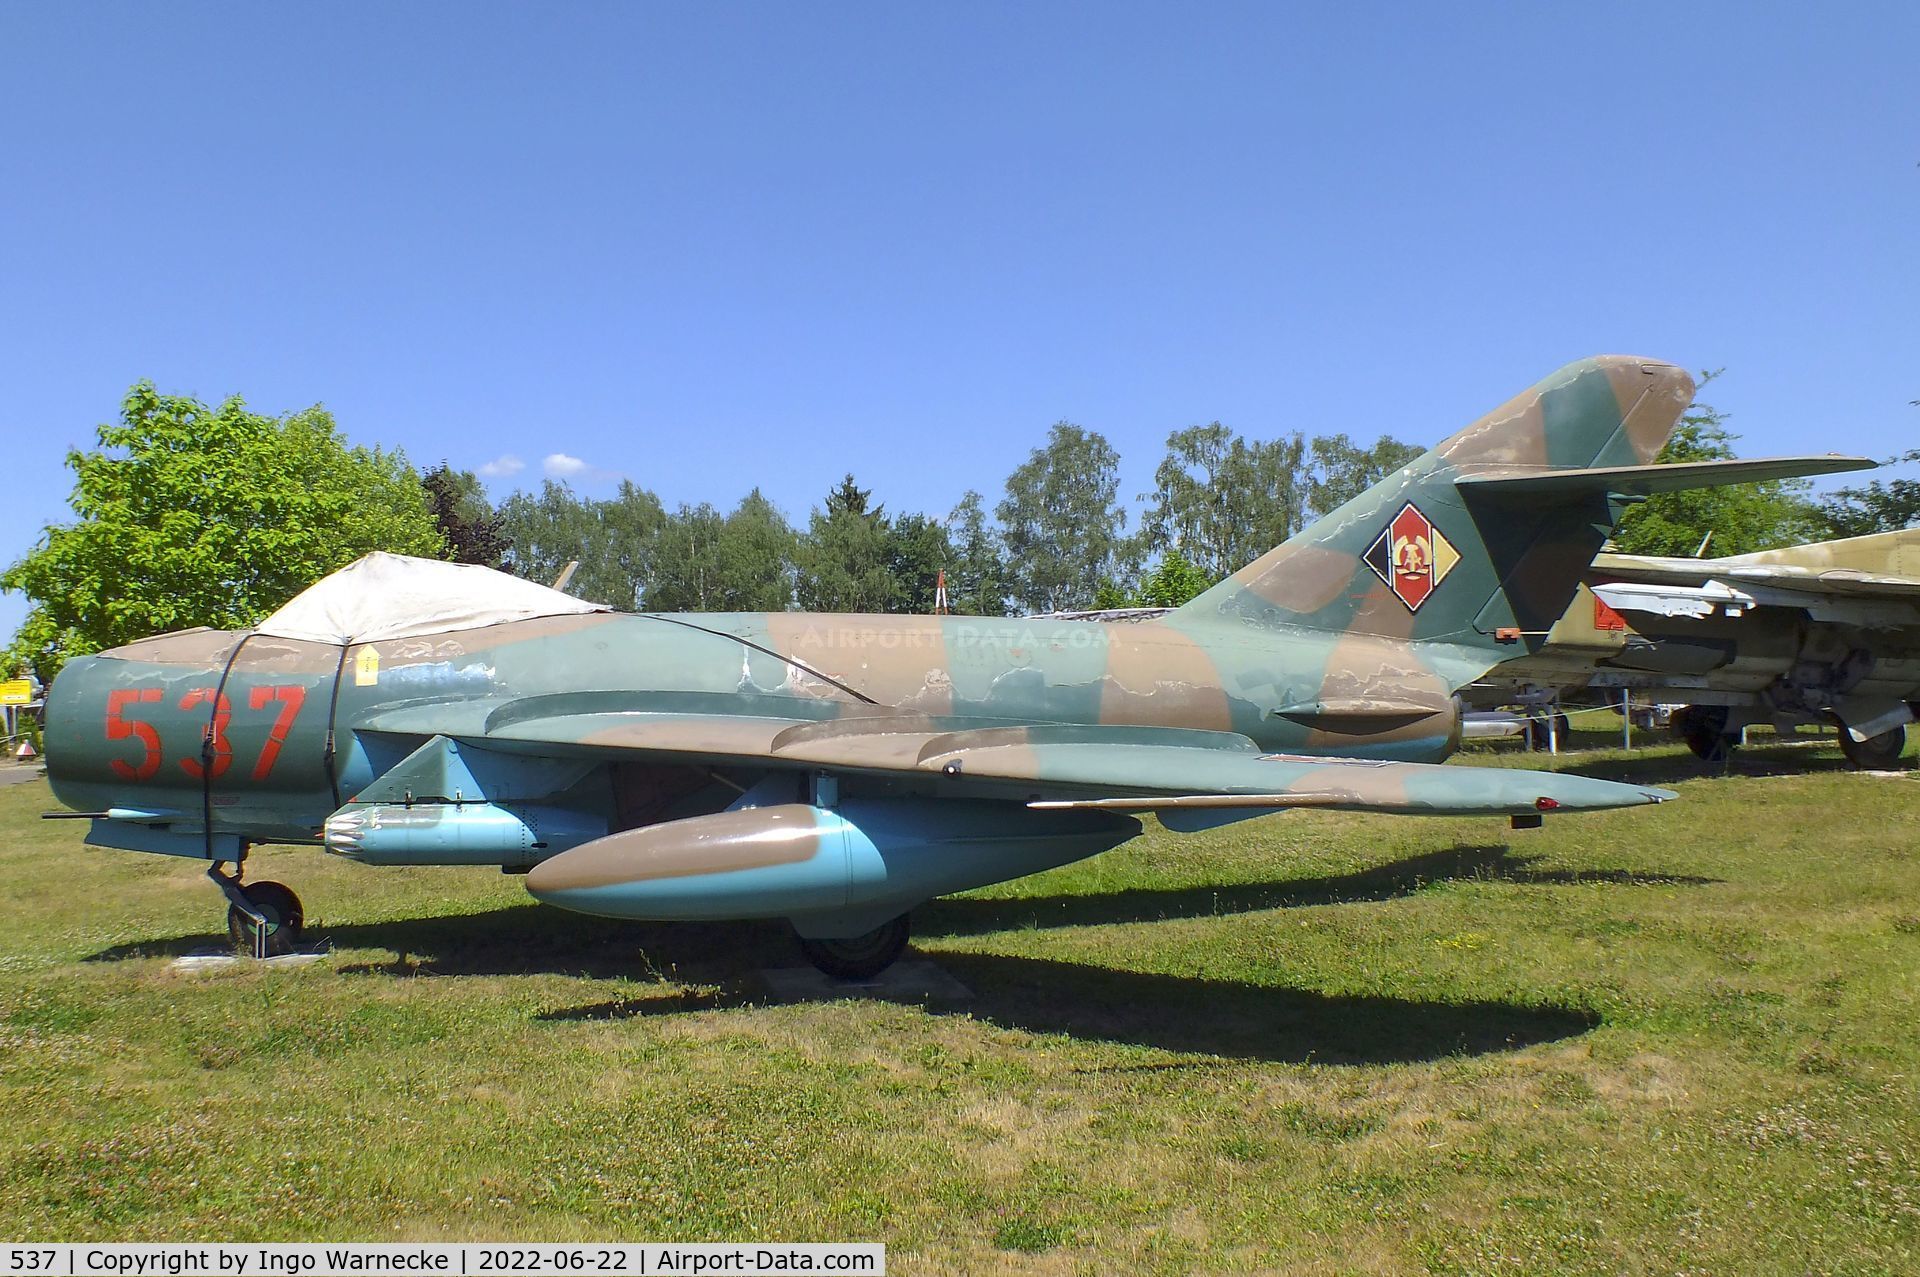 537, 1958 WSK Mielec Lim-5 MiG-17F C/N 1C 09-17, PZL-Mielec Lim-5 (MiG-17F) FRESCO-C at the Flugplatzmuseum Cottbus (Cottbus airfield museum)